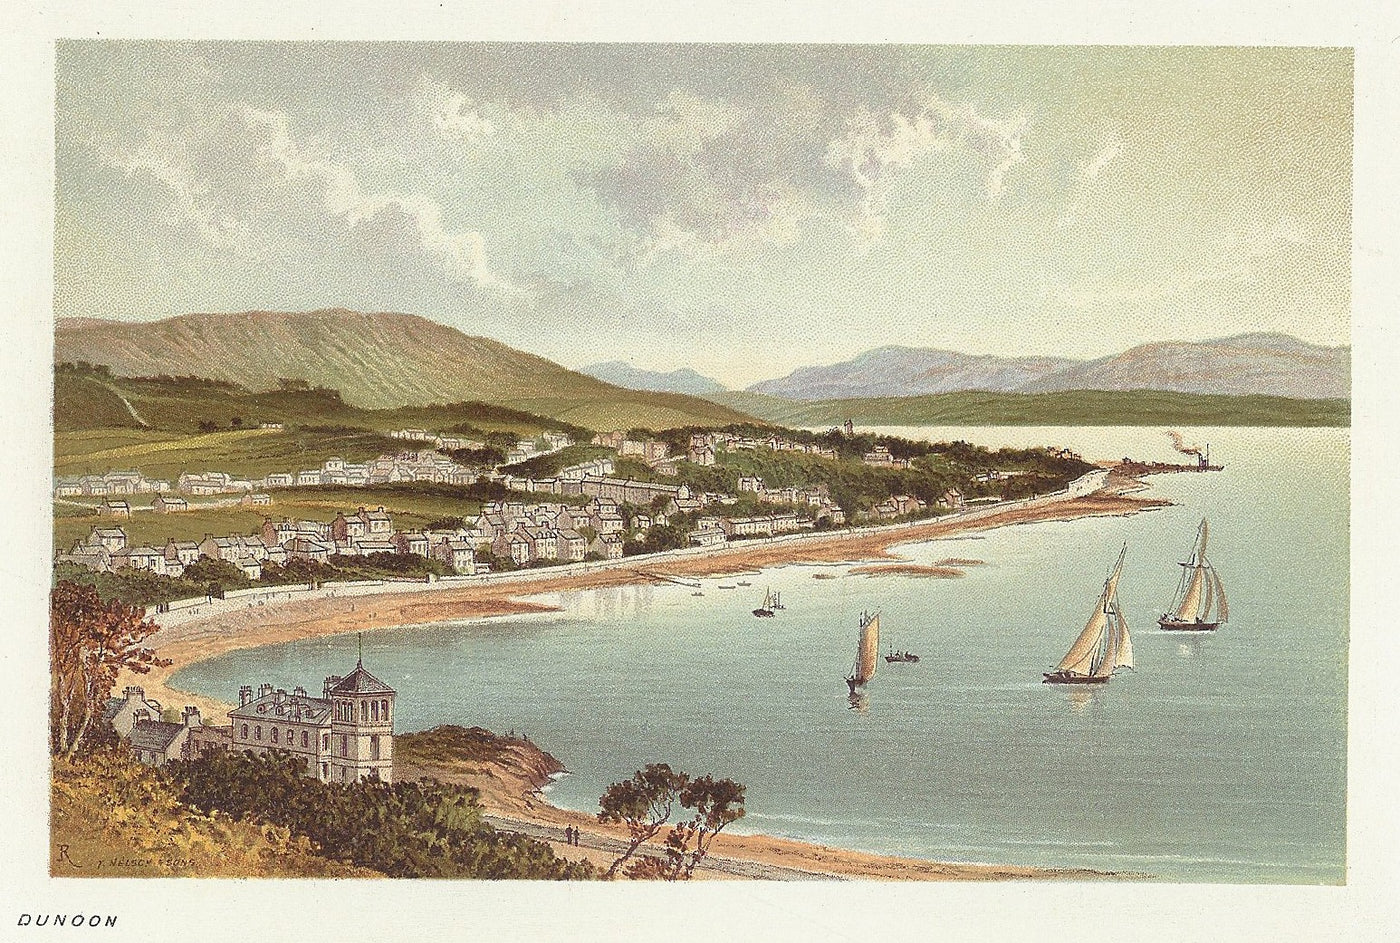 Dunoon Cowal peninsula Scotland antique print 1889